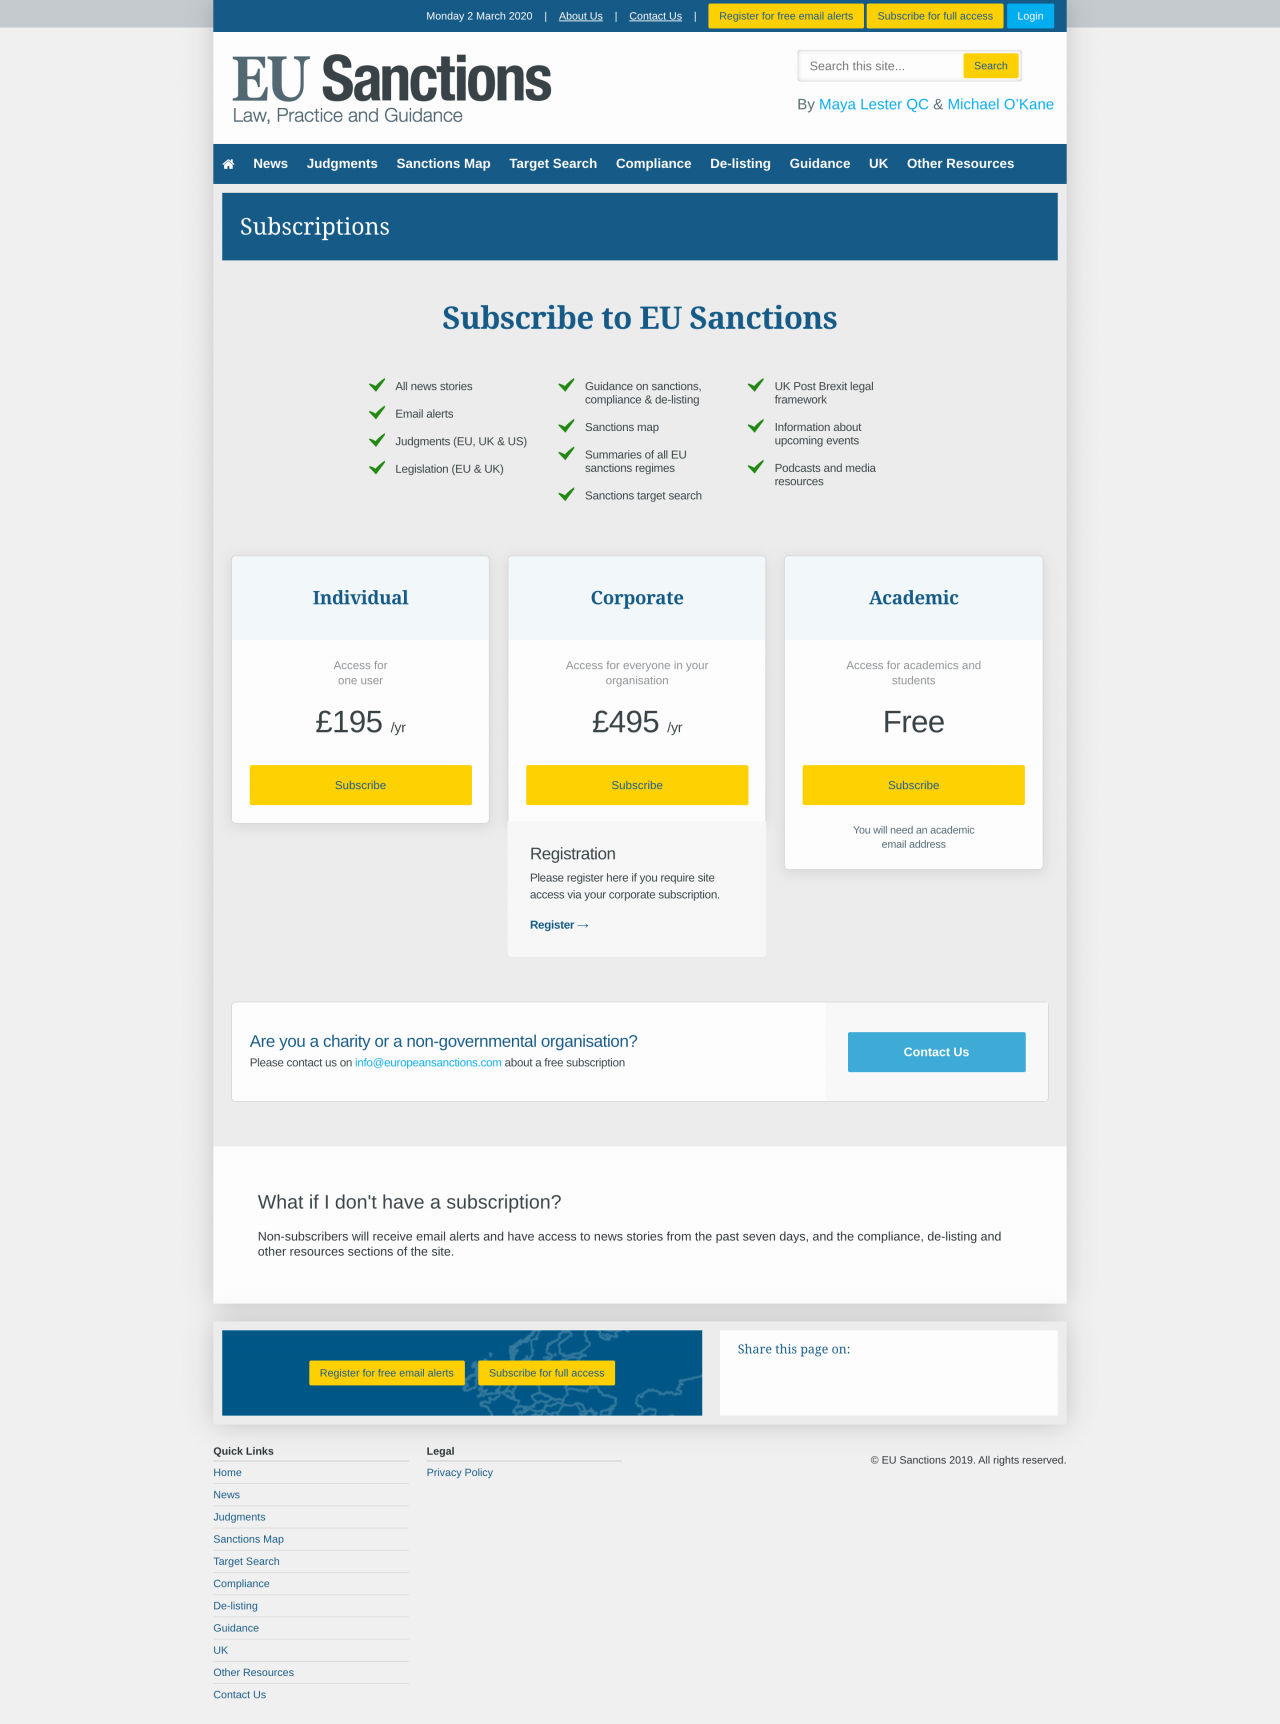 EU Sanctions Website | Tom Hoadley | Freelance Wordpress Developer